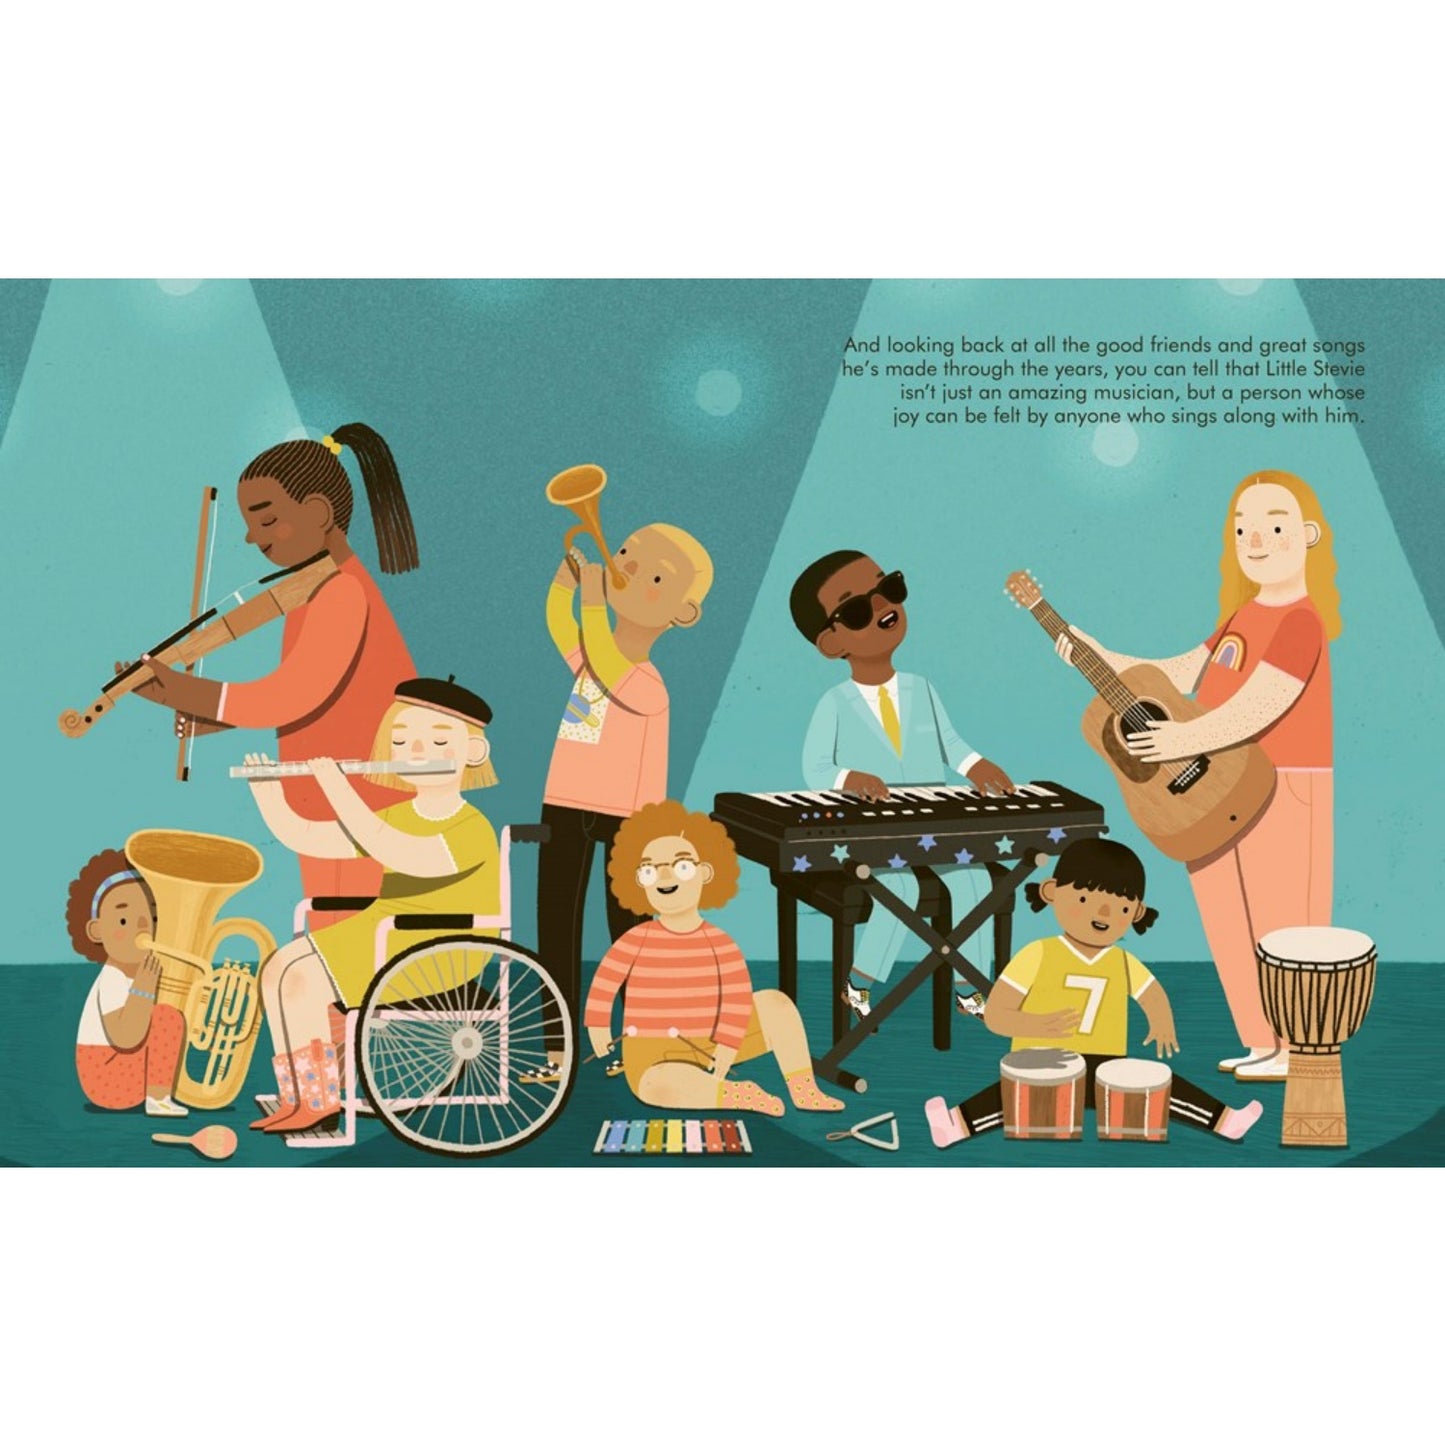 Stevie Wonder | Little People, BIG DREAMS | Children’s Book on Biographies